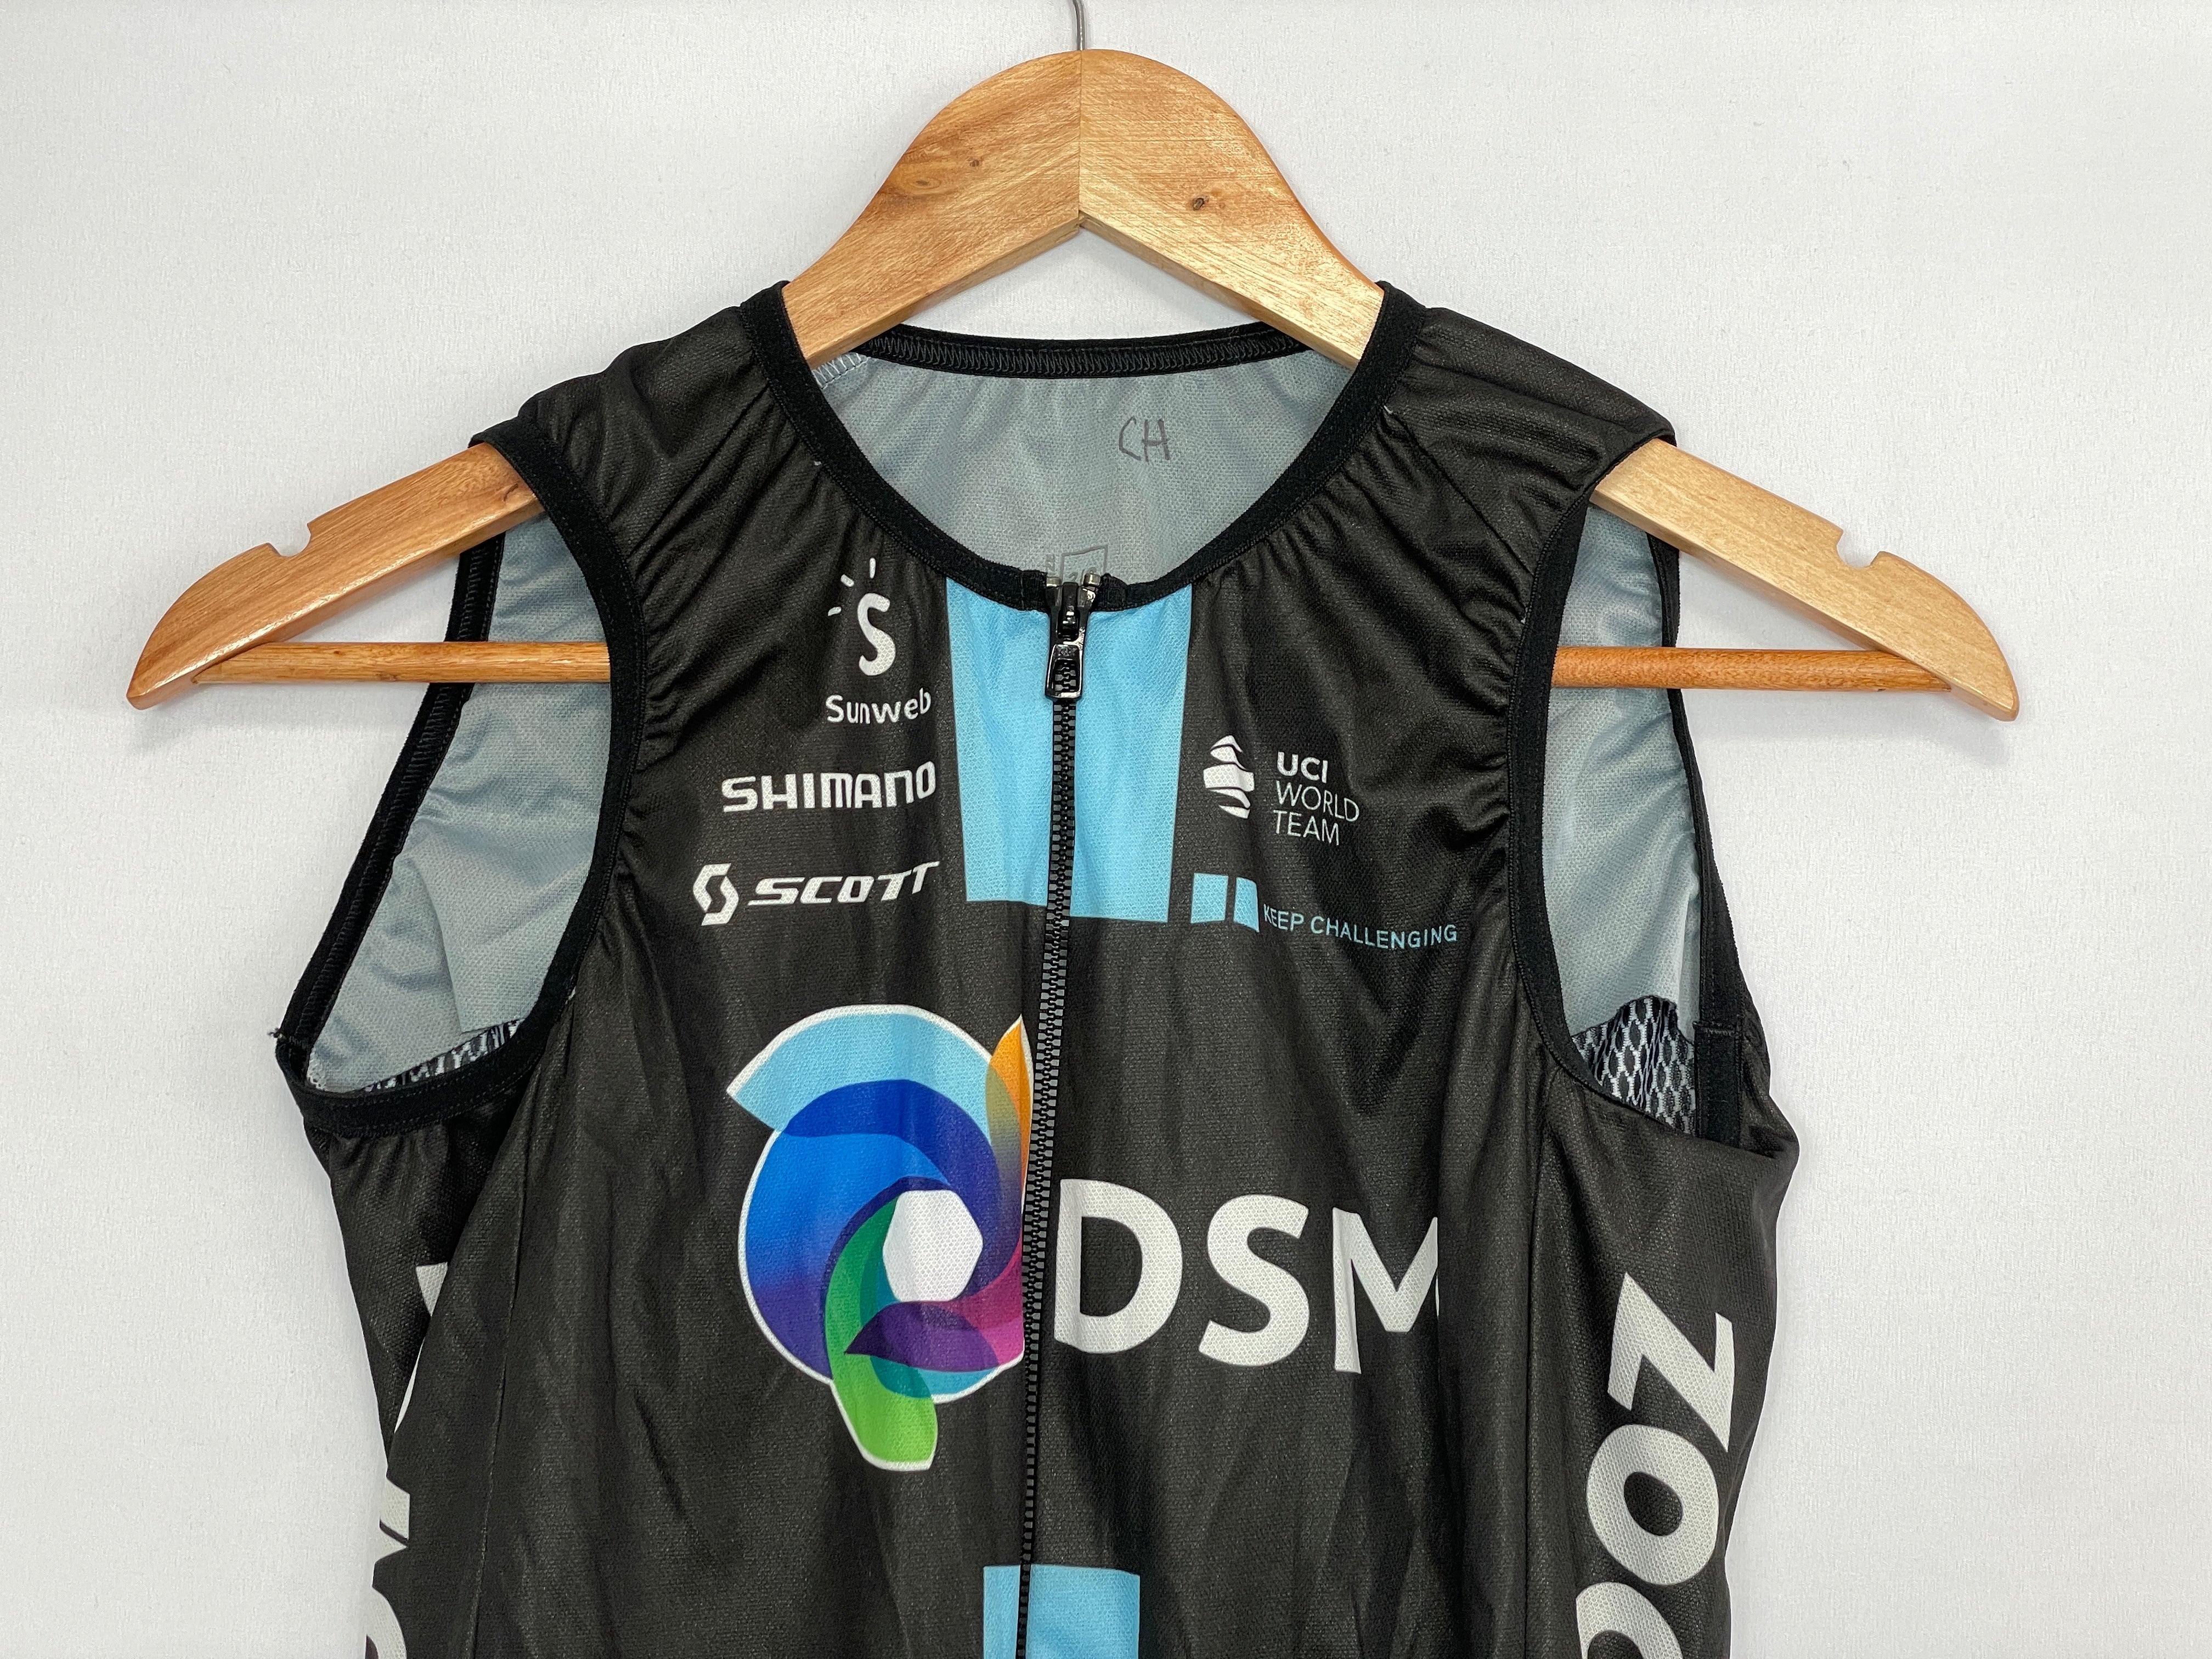 Team DSM - Light Windproof Vest by Bioracer